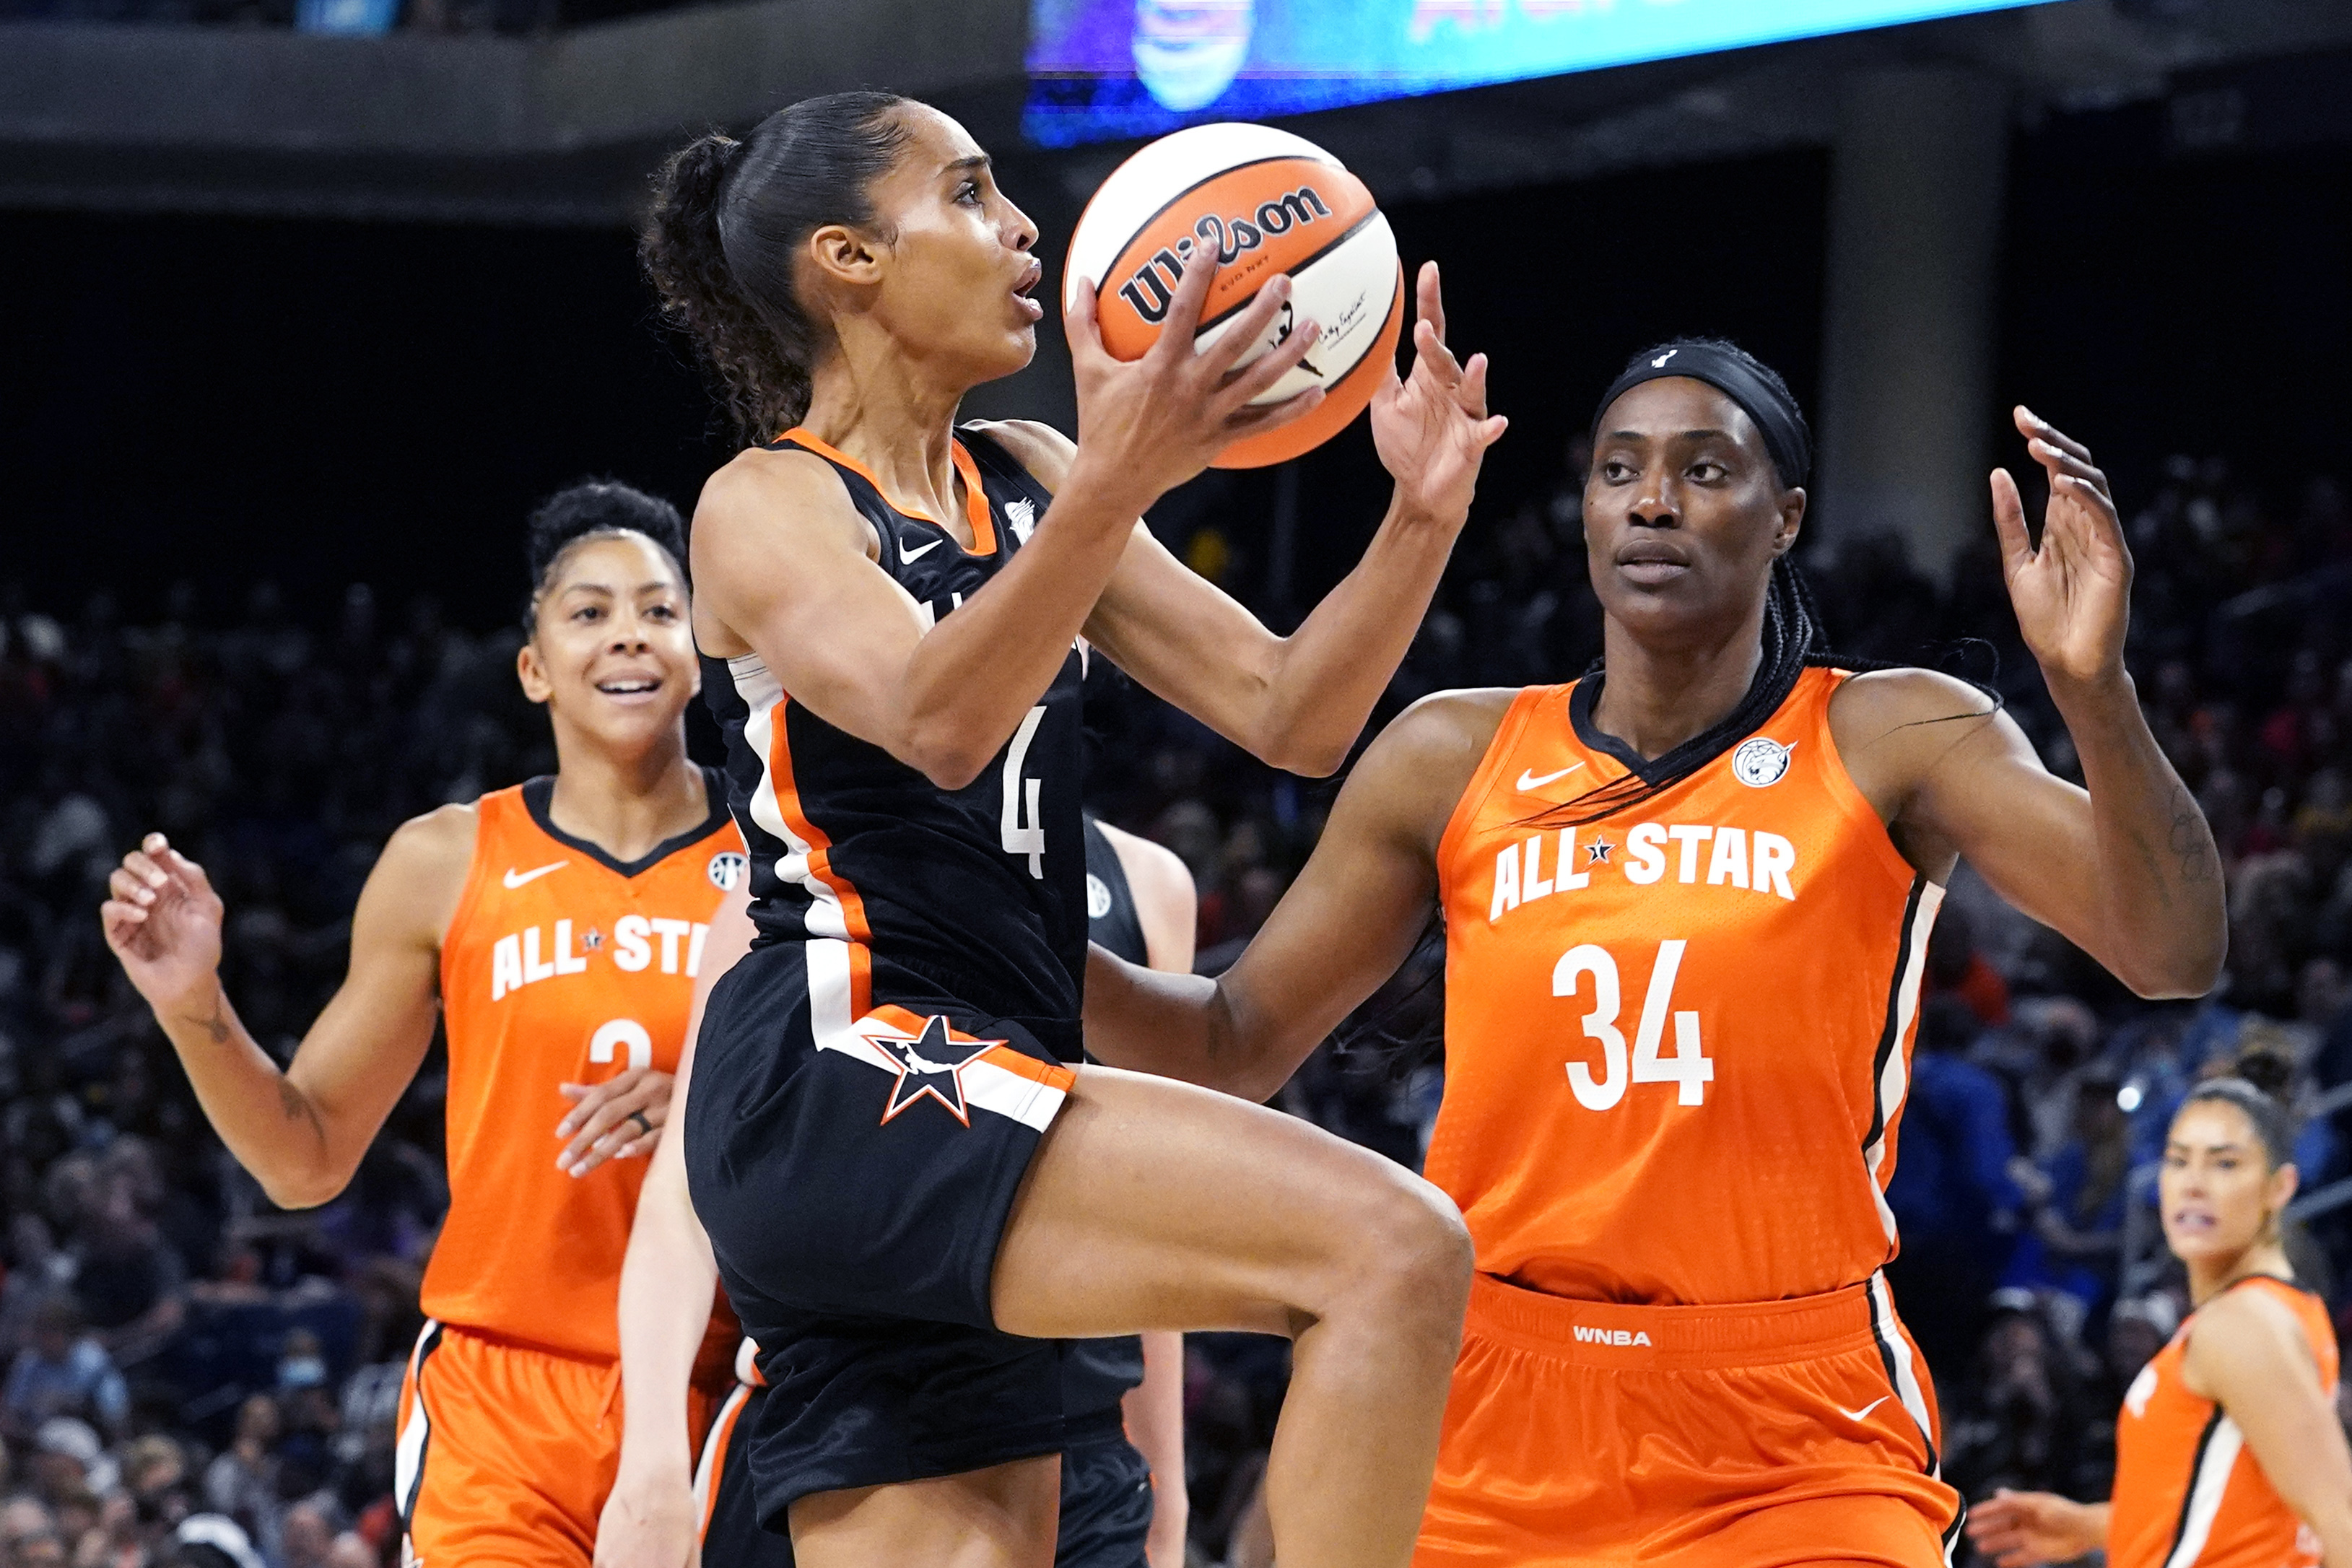 WNBA All-Star Game won by Team Stewart over Team Wilson, Aces